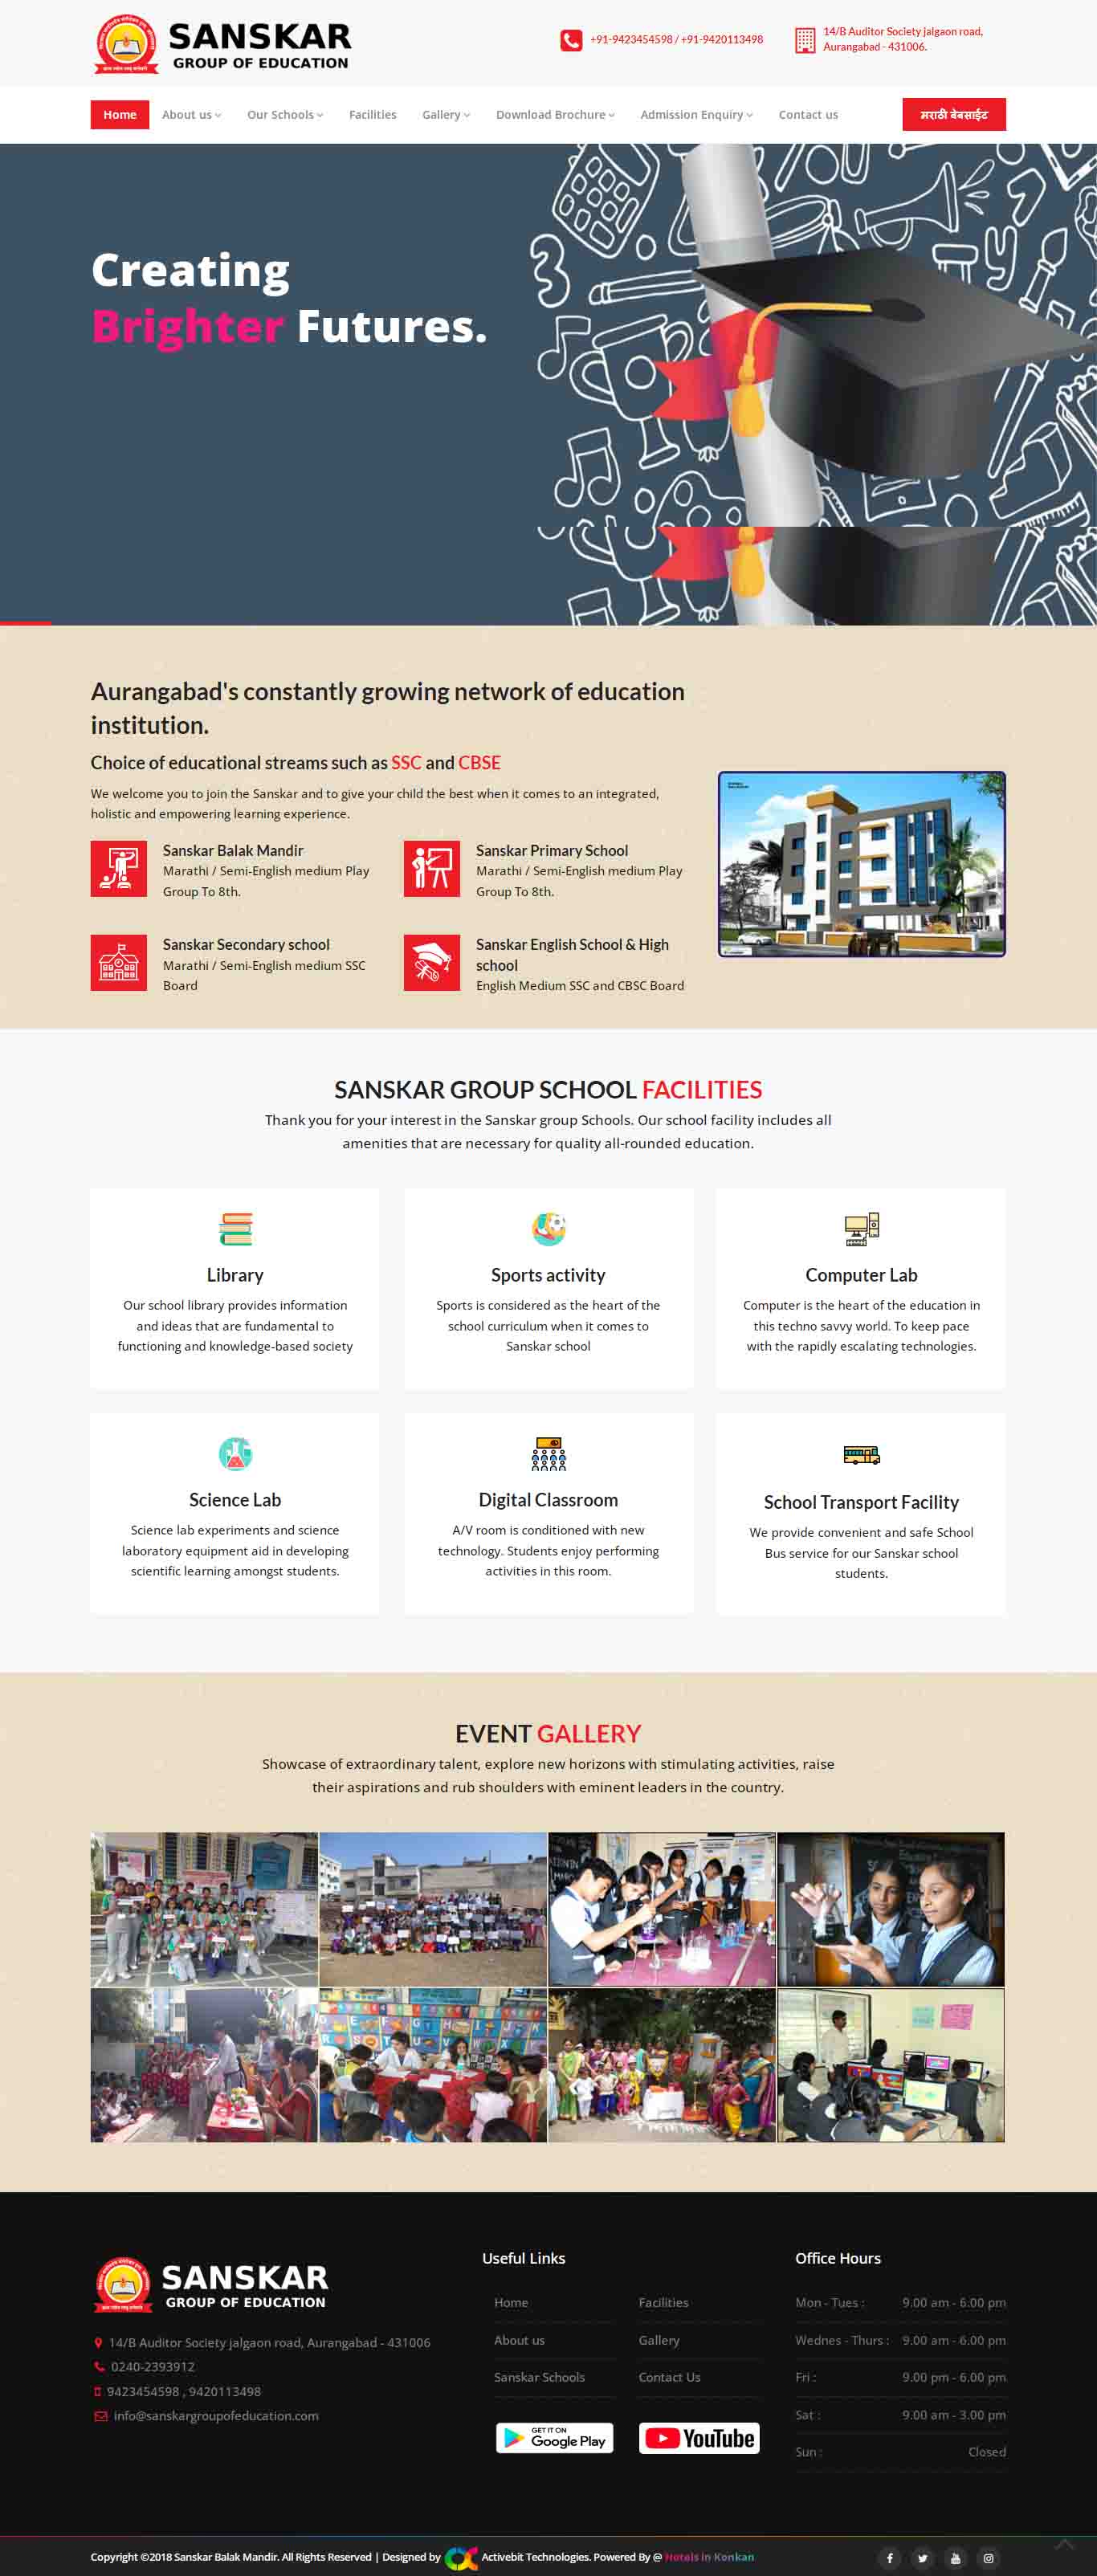 Sanskar Group of Education web design services